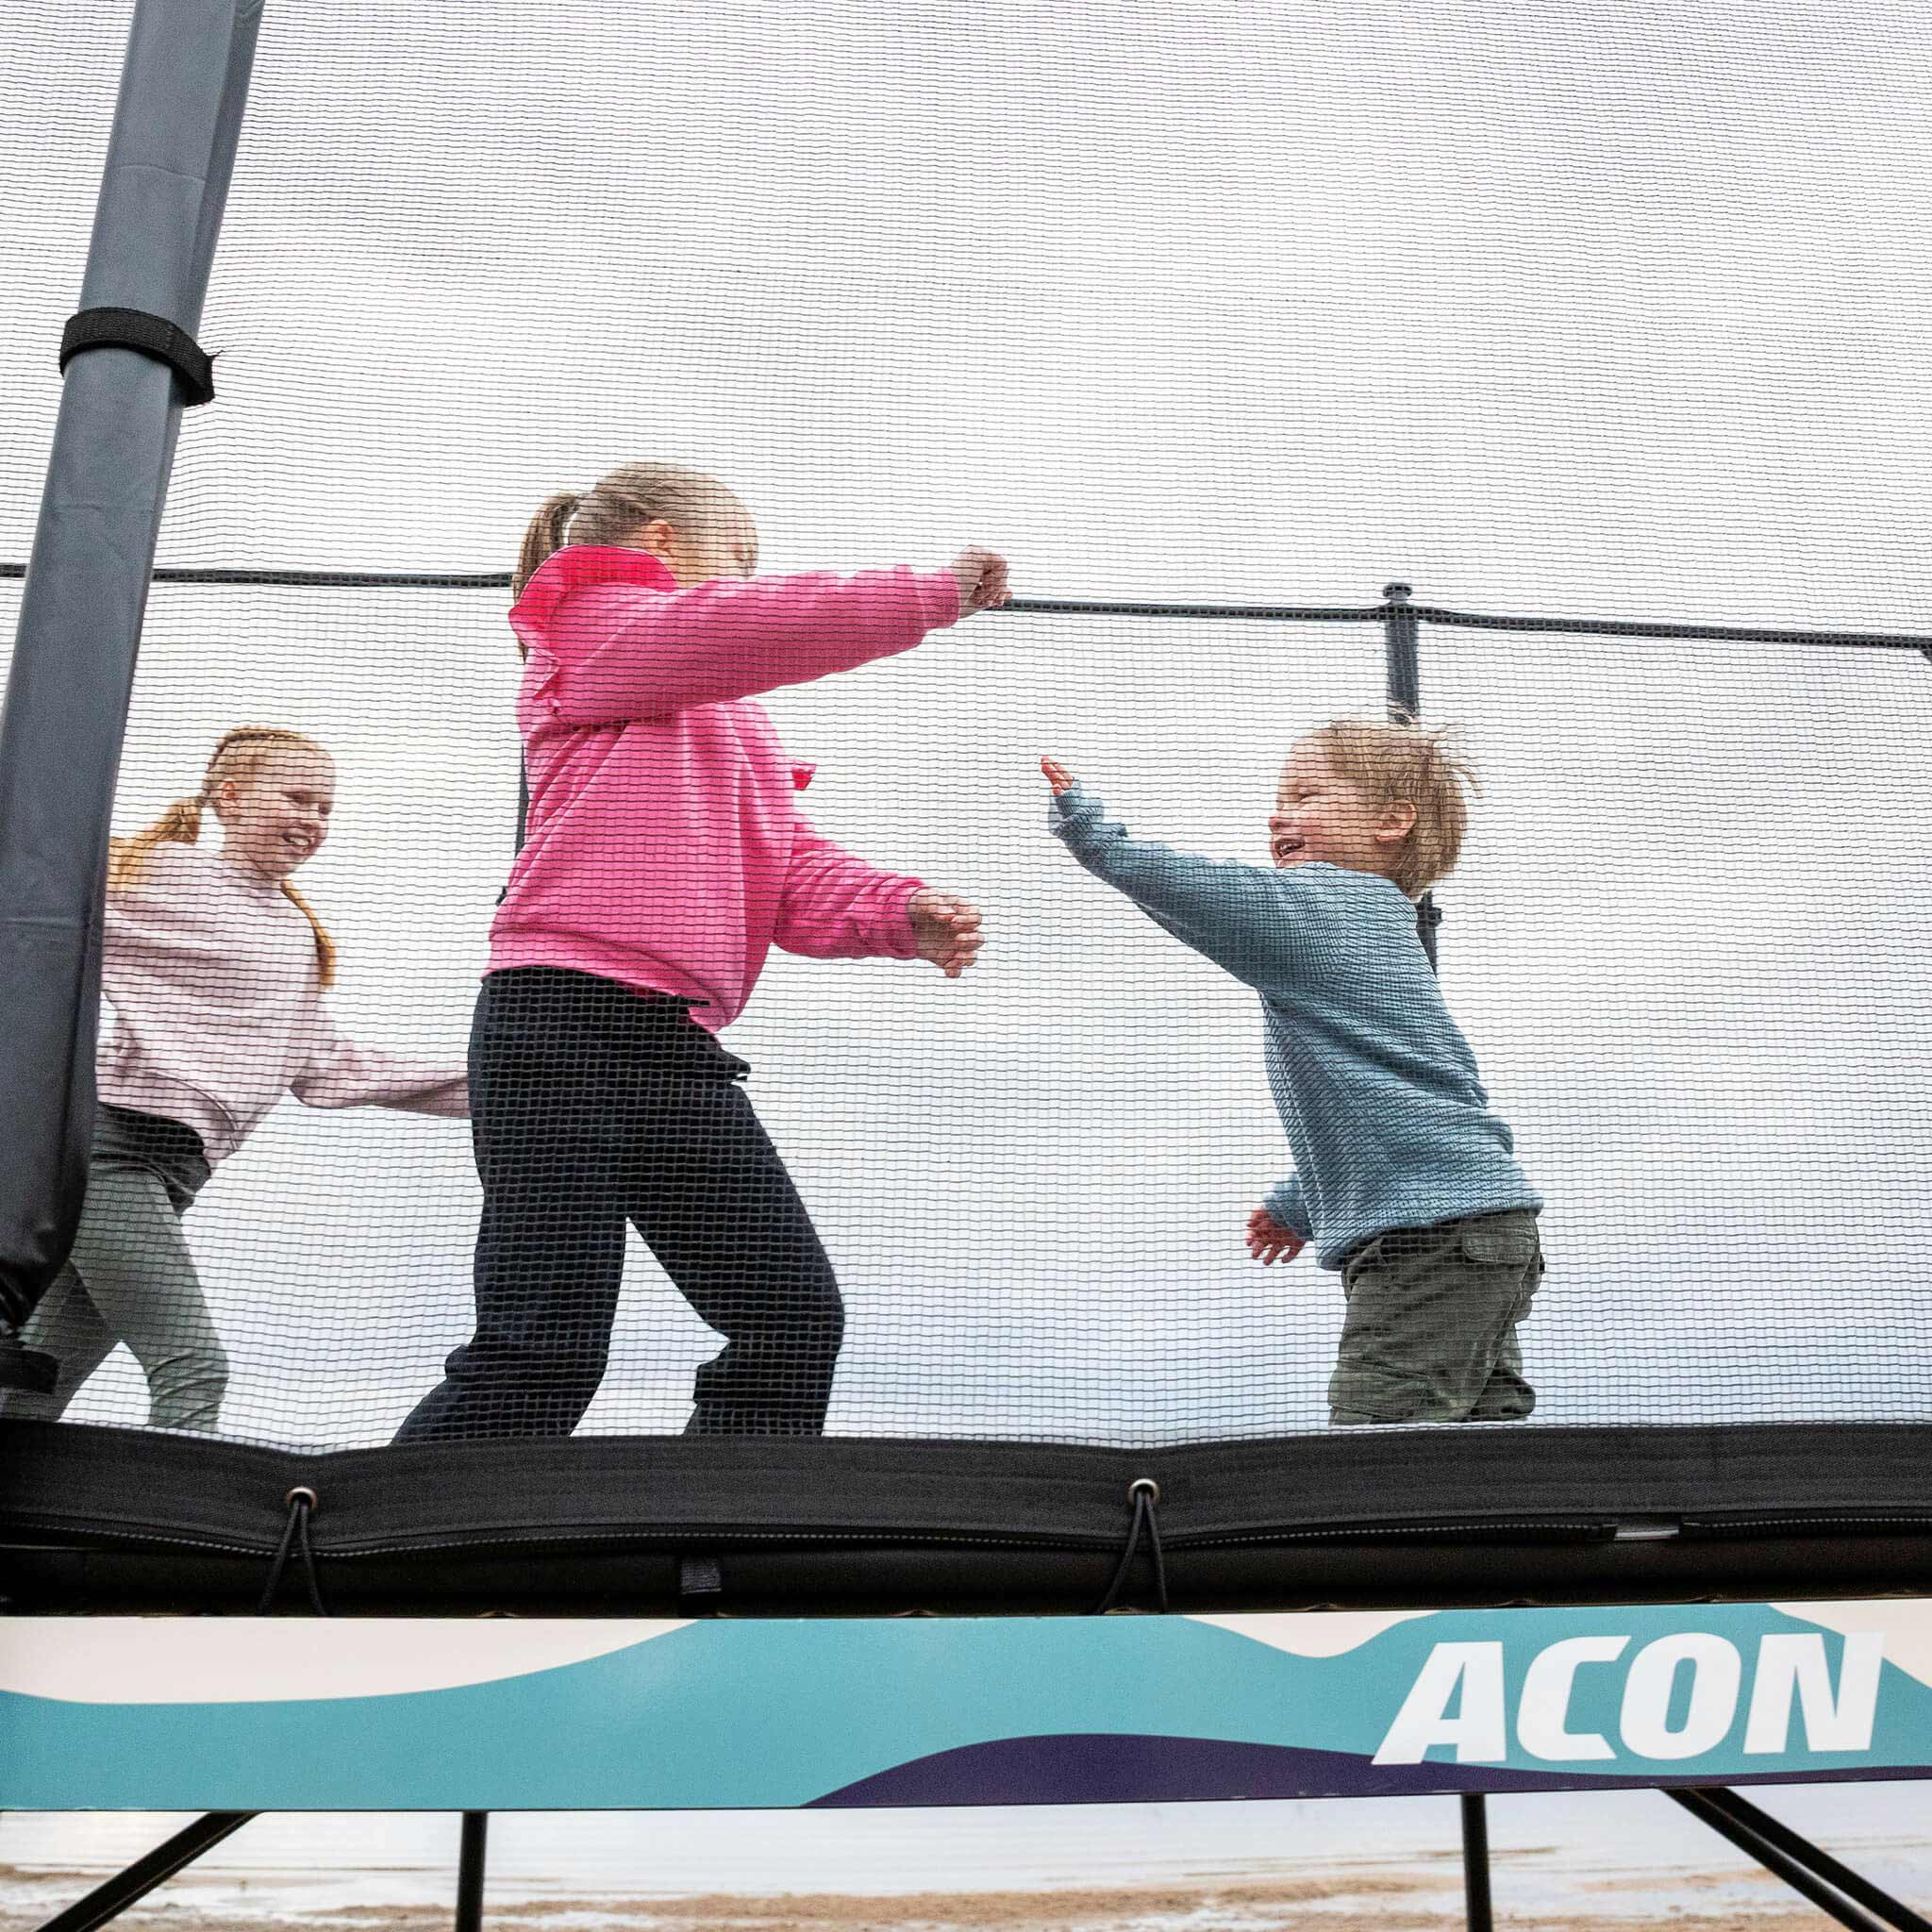 Three children play on the Acon X Trampoline.